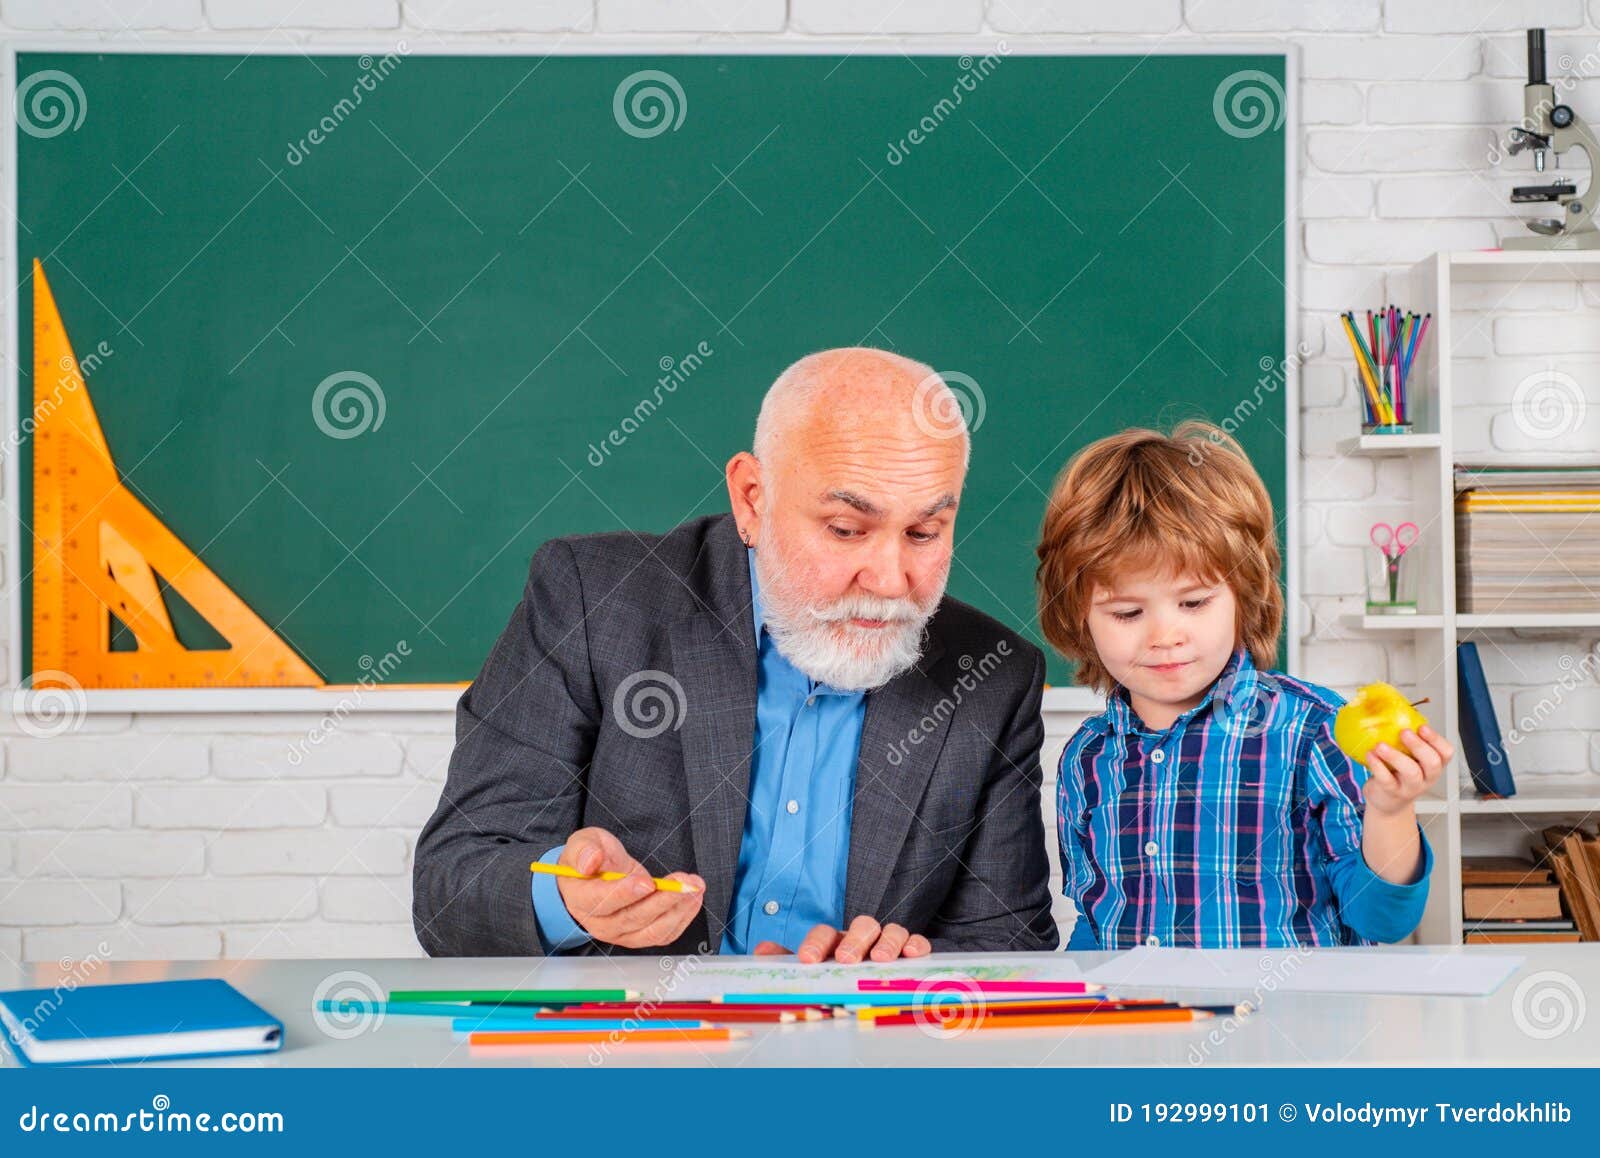 Older school teacher with younger dude